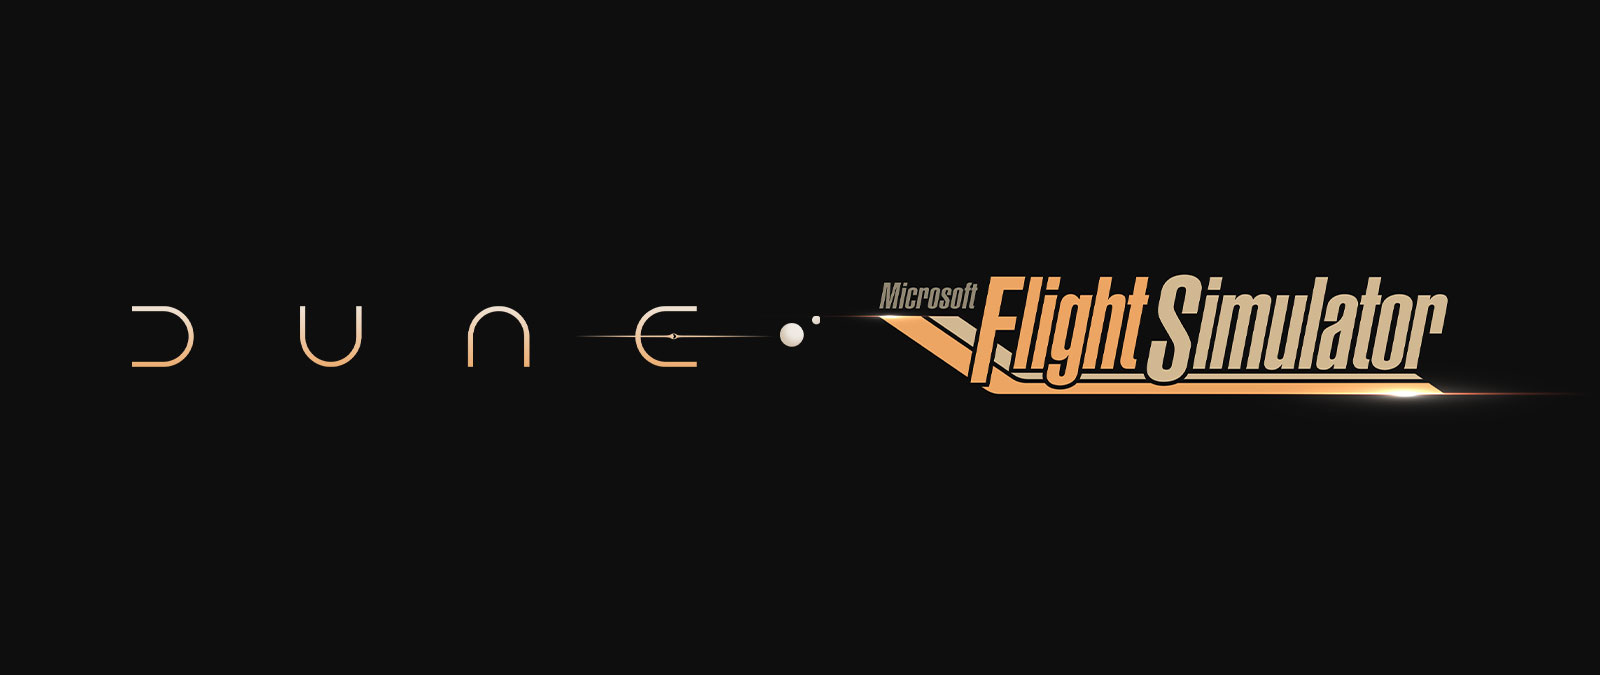 Dune film logo, Microsoft Flight Simulator logo